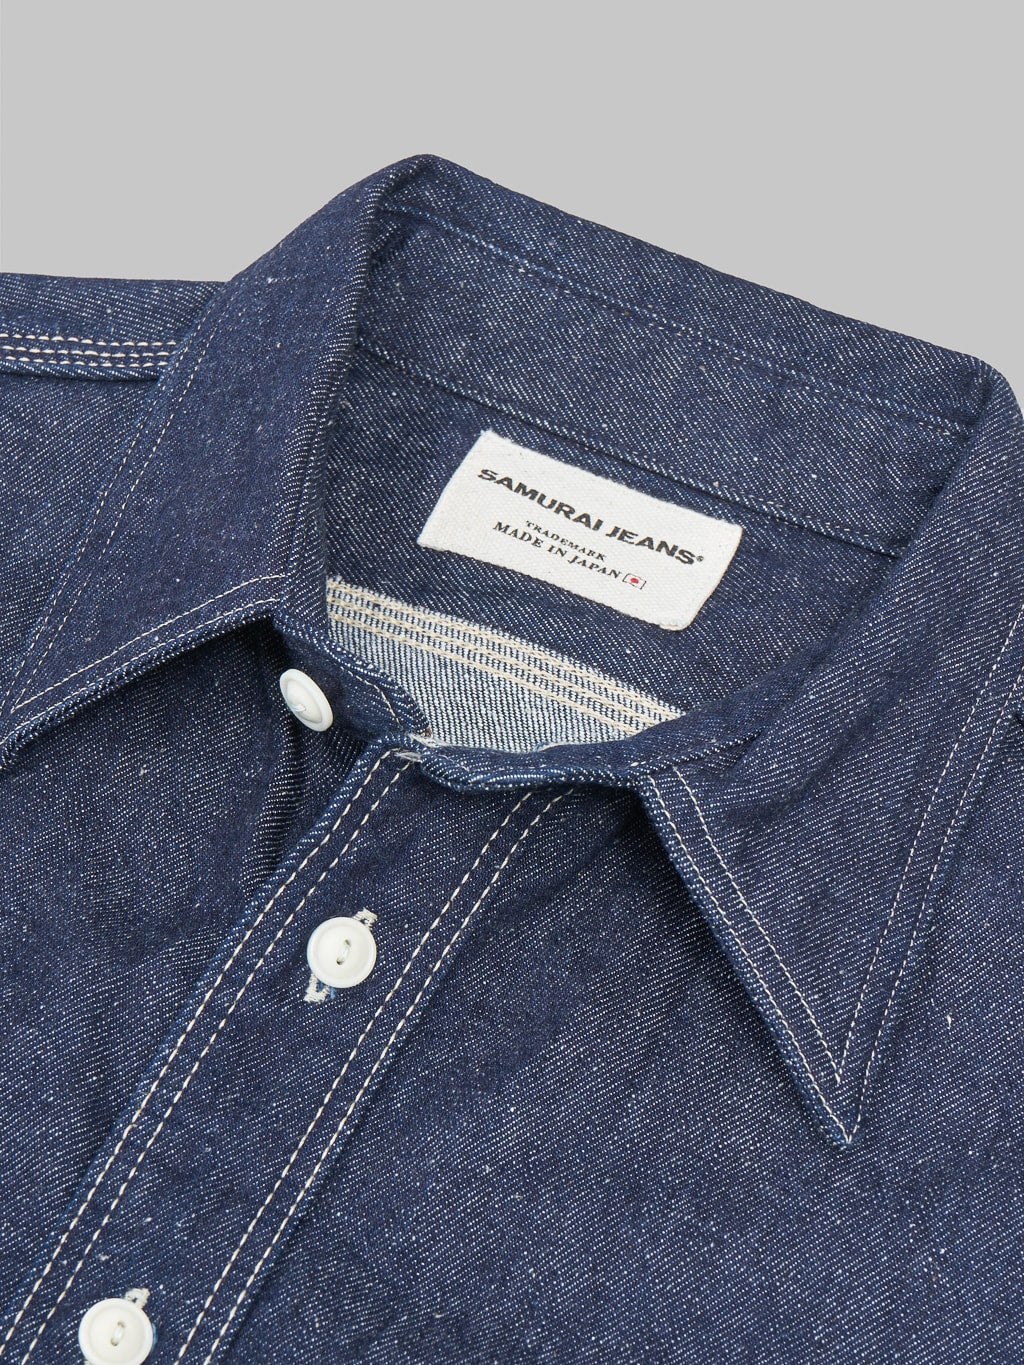 Samurai jeans denim work shirt brand label